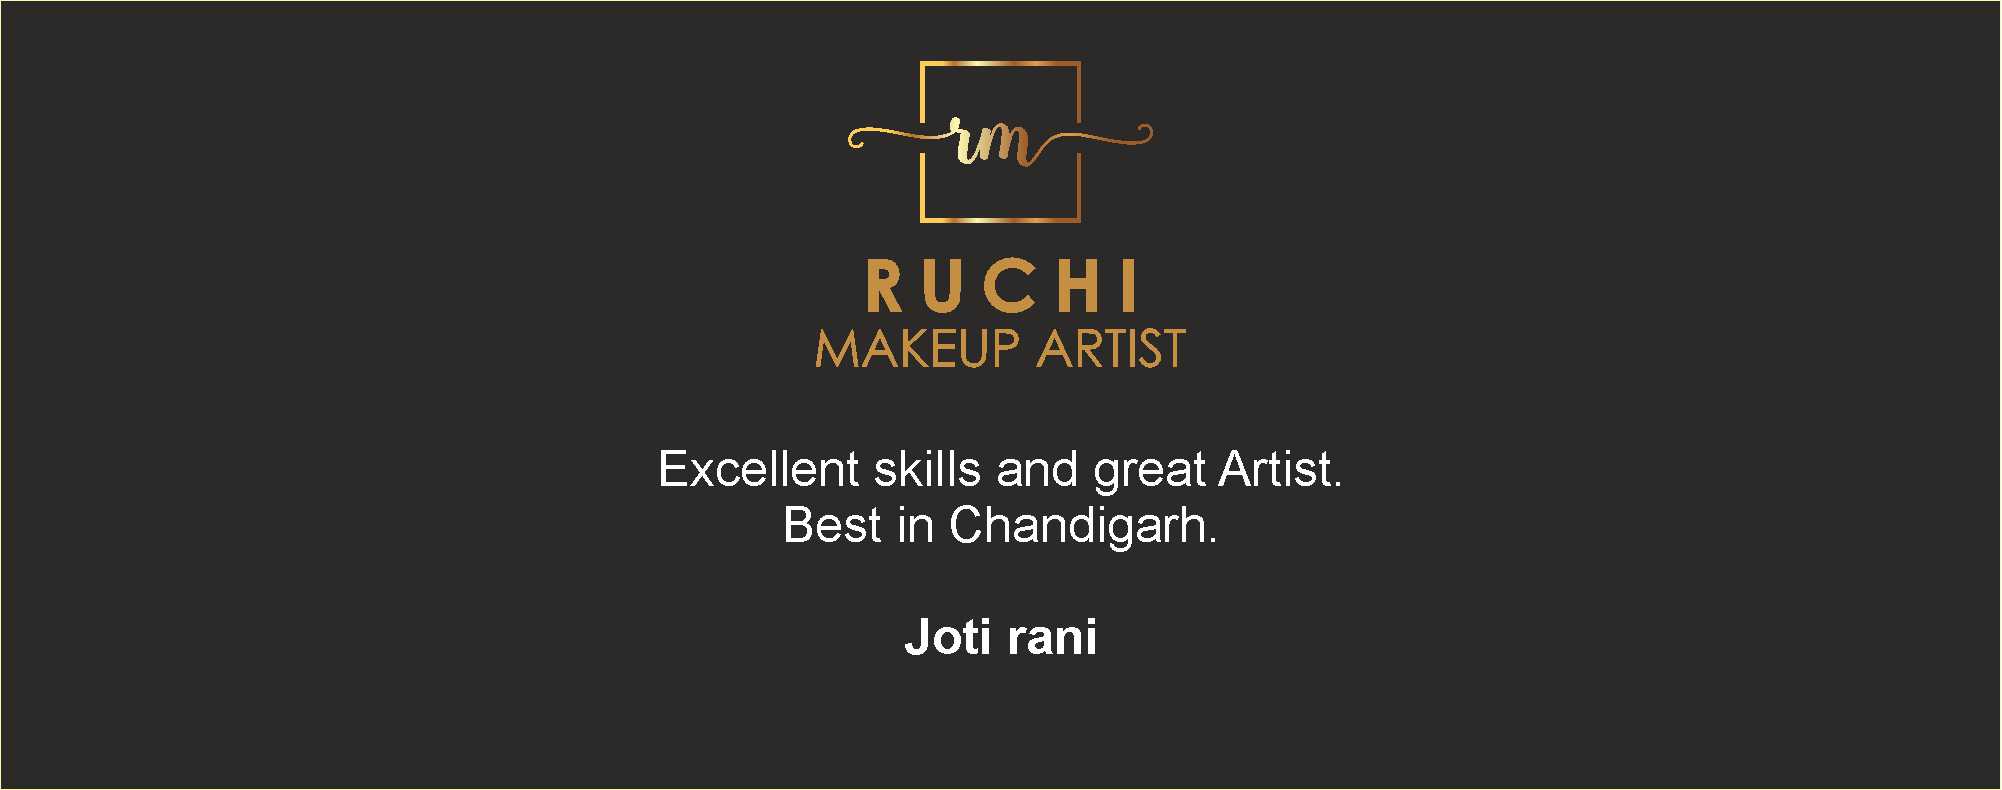 Ruchi Makeup Reviews